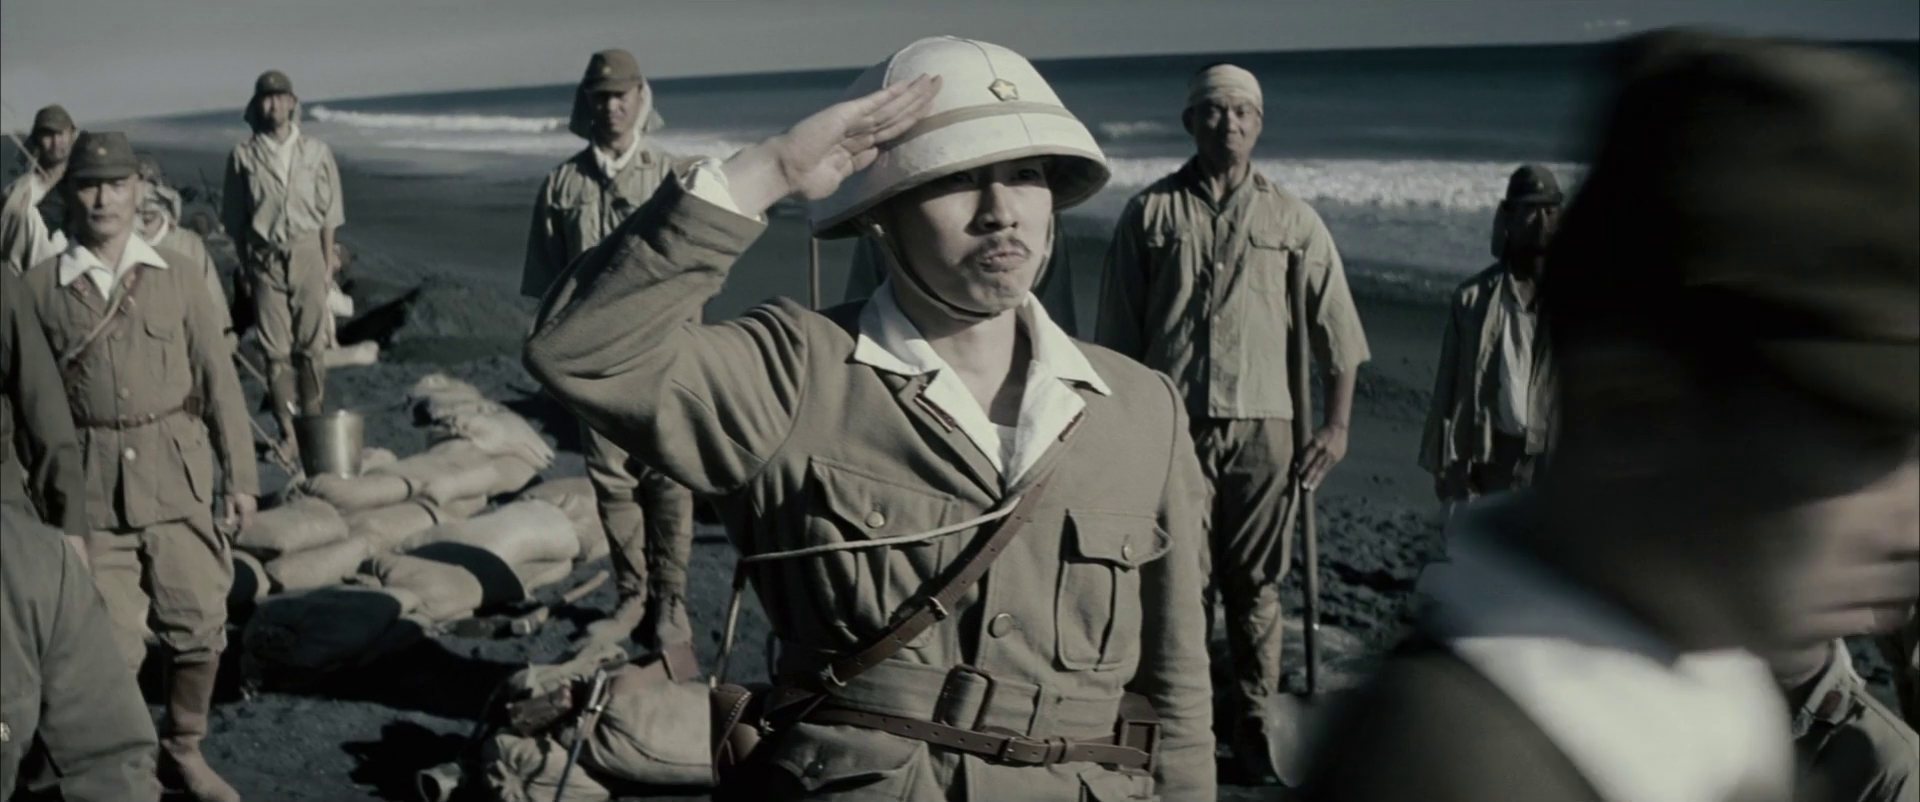 Cartas Desde Iwo Jima (2006) [BDRip/1080p][Esp/Jap Subt][Bélico][6,19GB][1F/MG]      Vlcsnap-2021-09-13-10h13m53s387